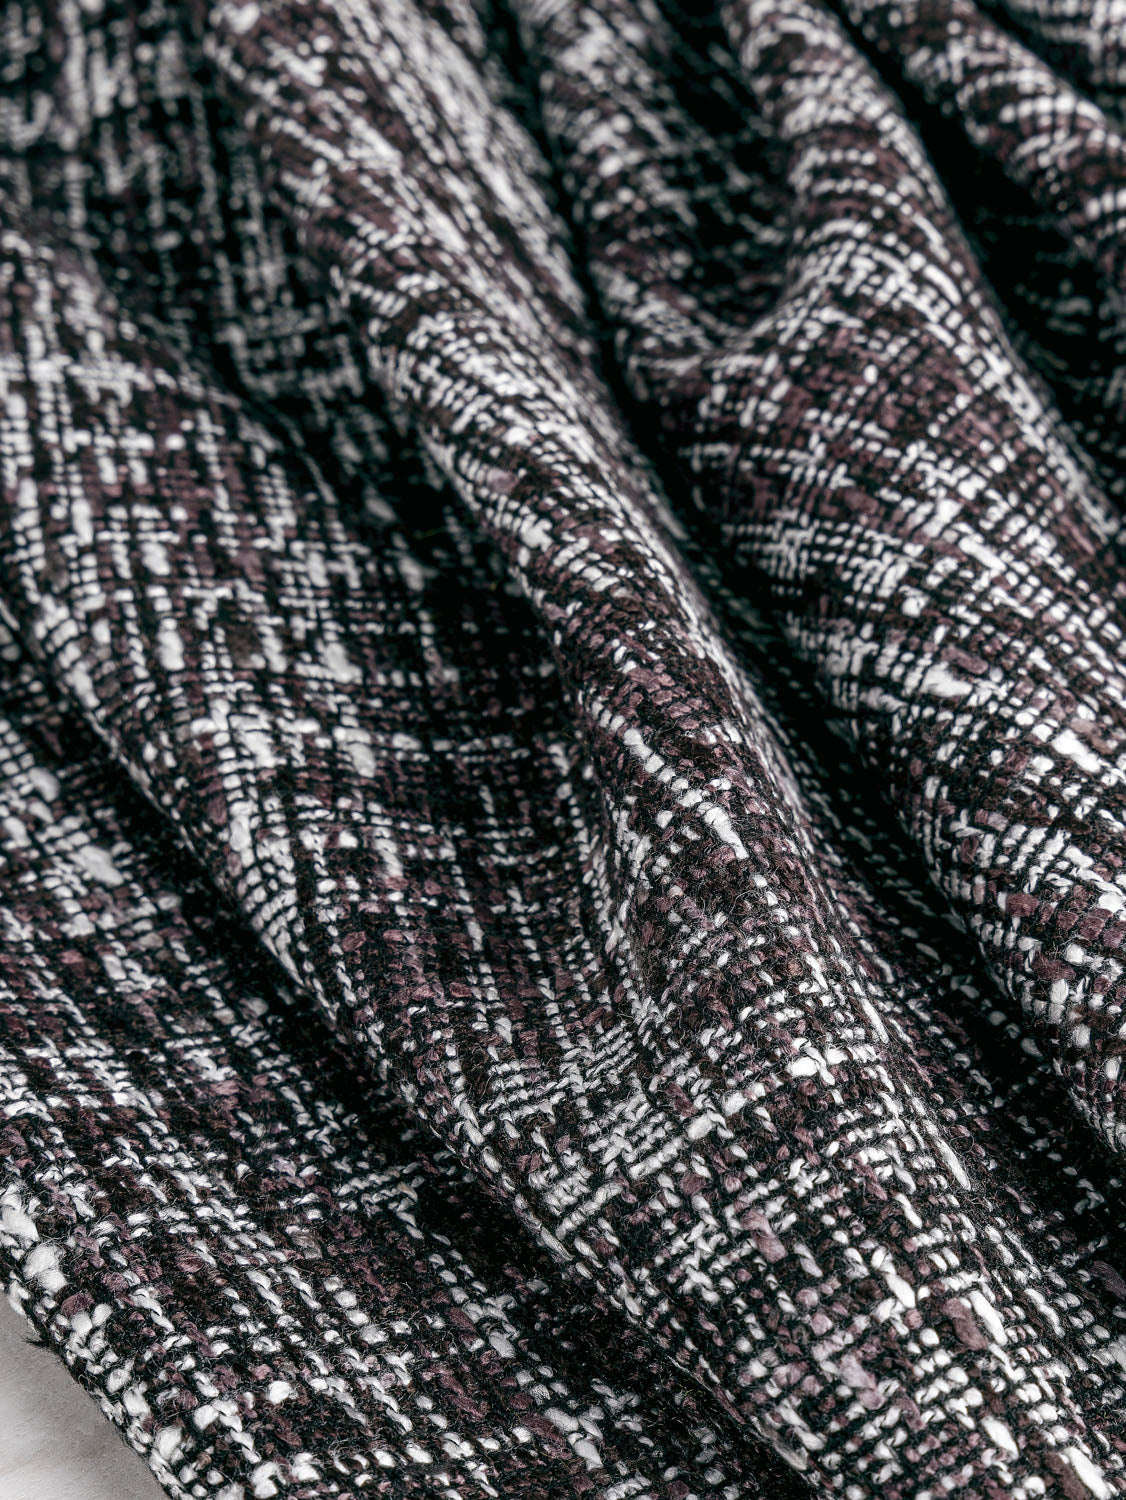 Classic Denim Woven Jacquard fabric , Chanel Jean Fabric For